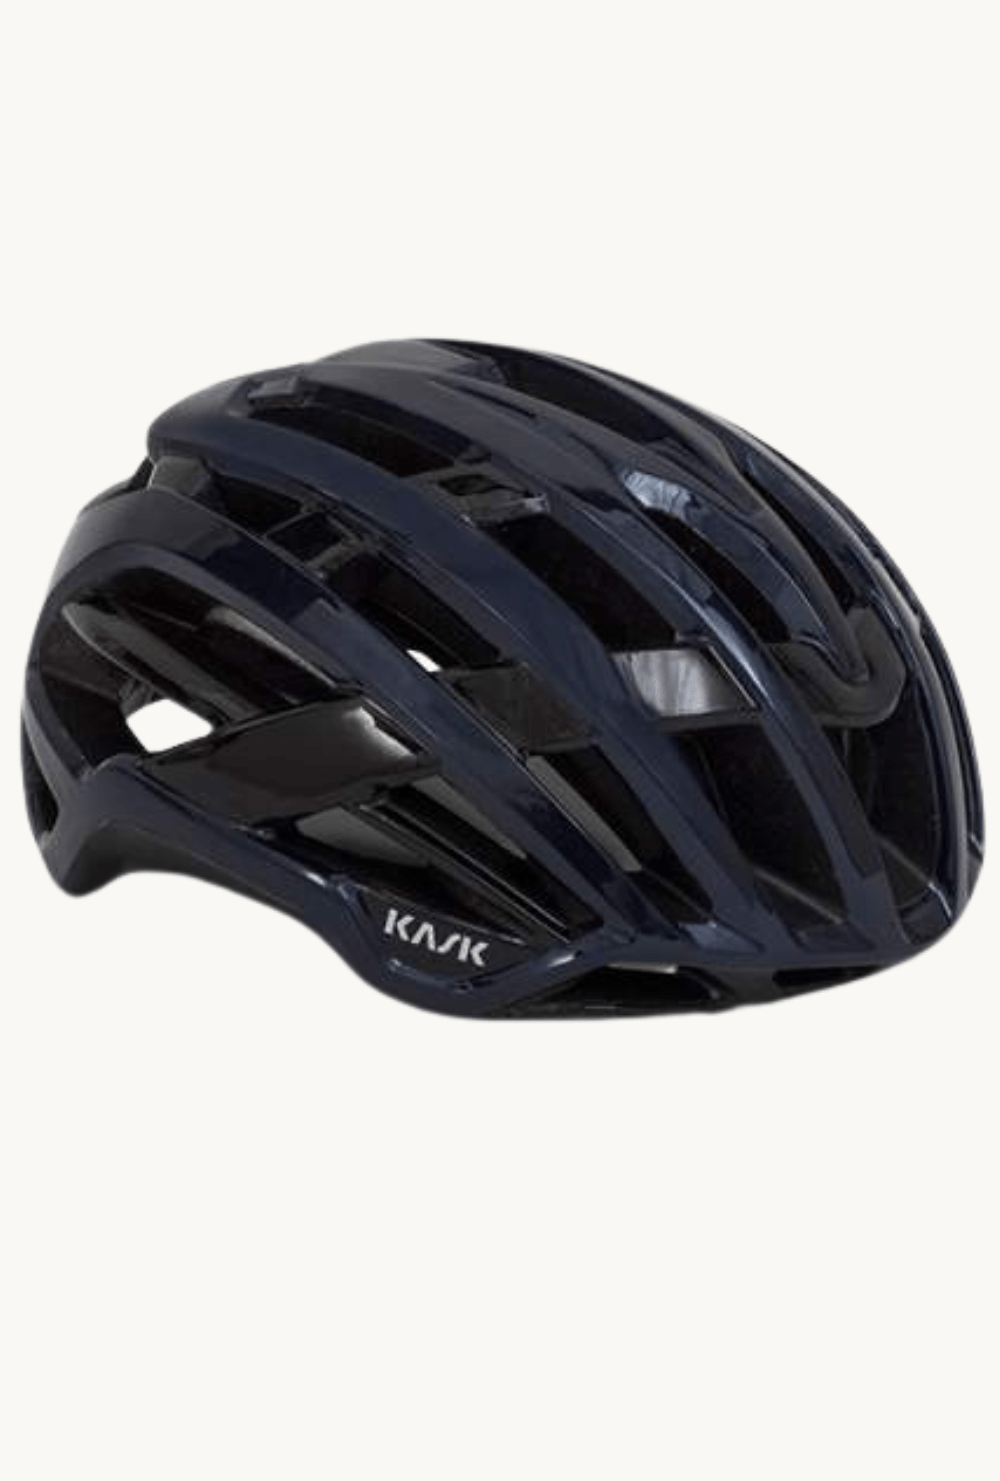 Helmet - Kask Valegro Navylarge / Navy